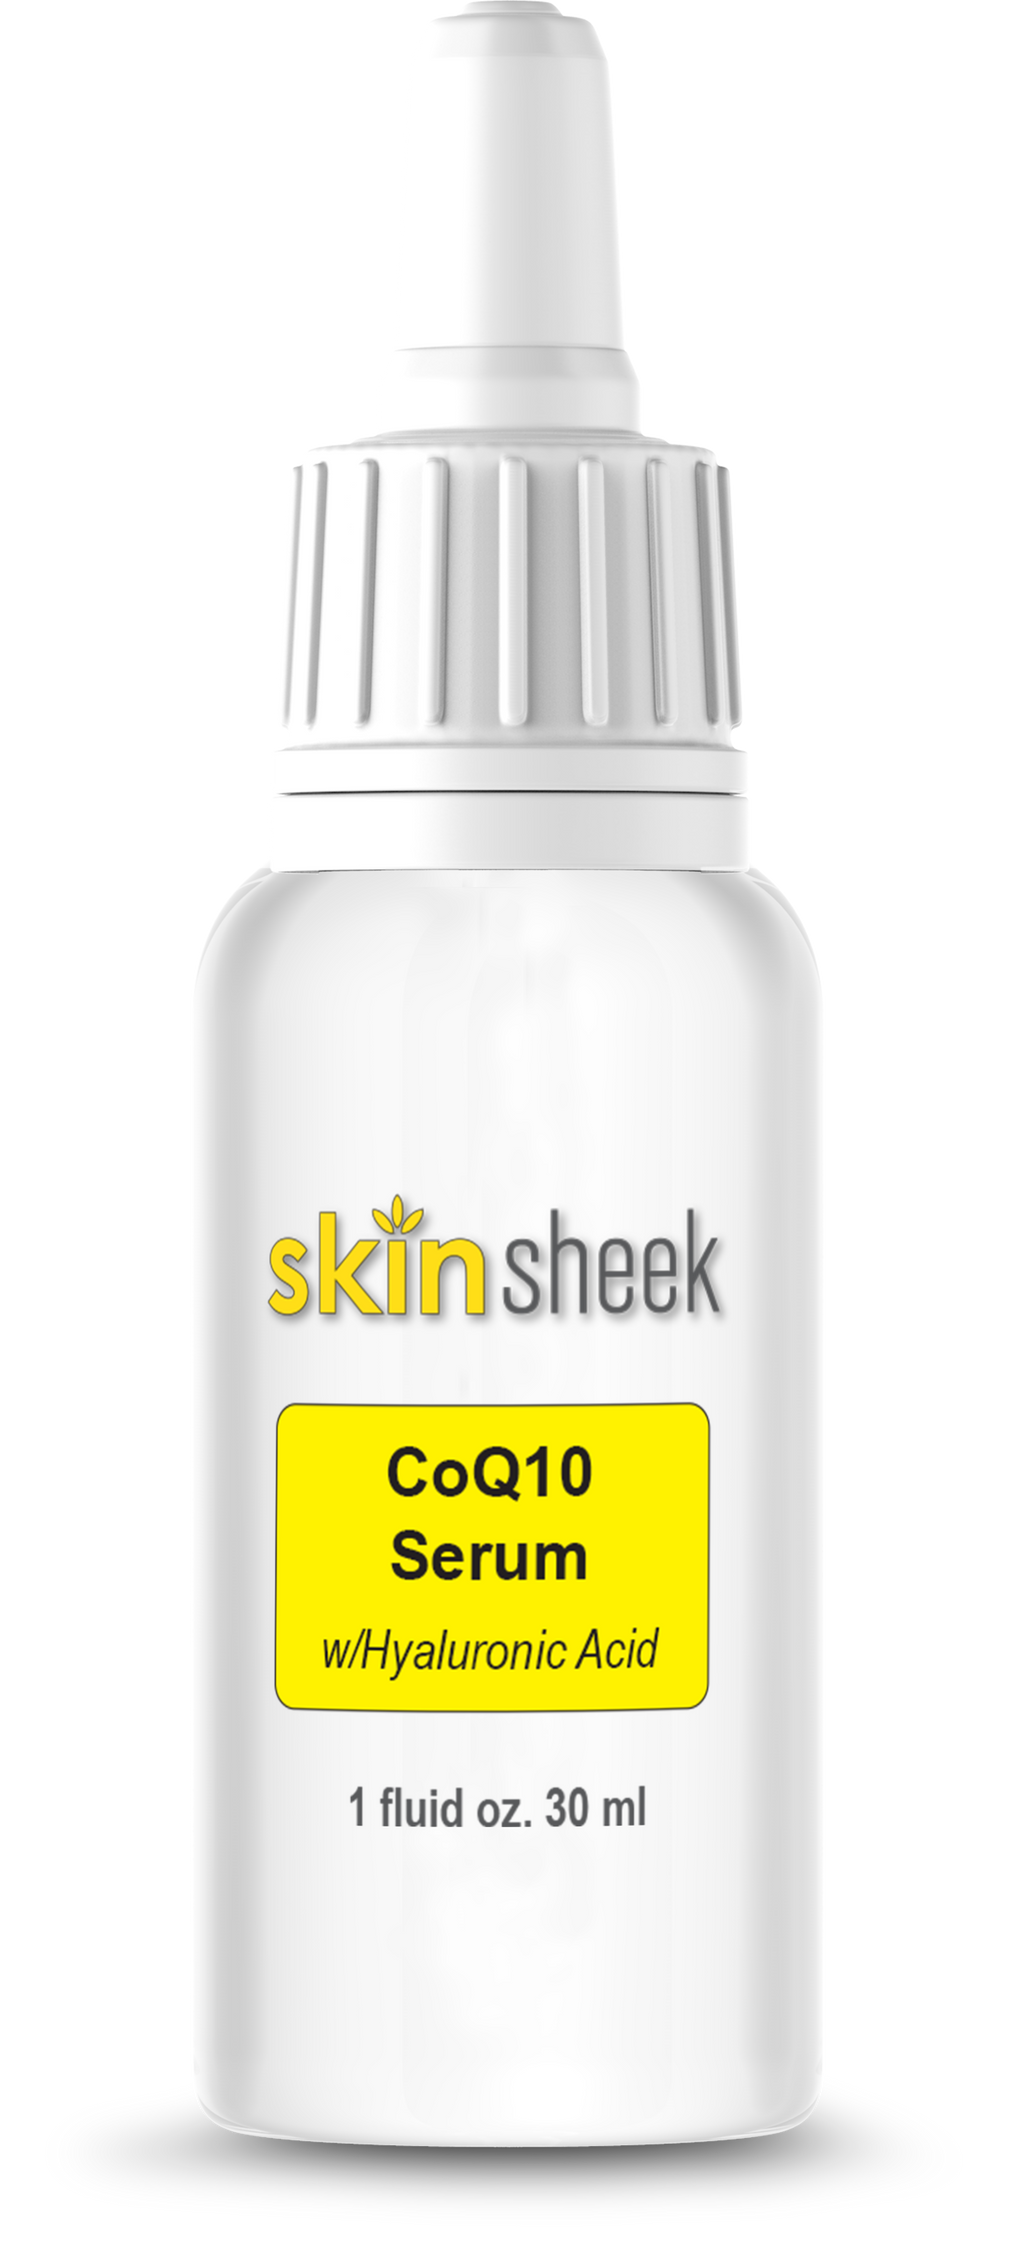 Skin Sheek - COQ10 w/Hyaluronic Acid Serum